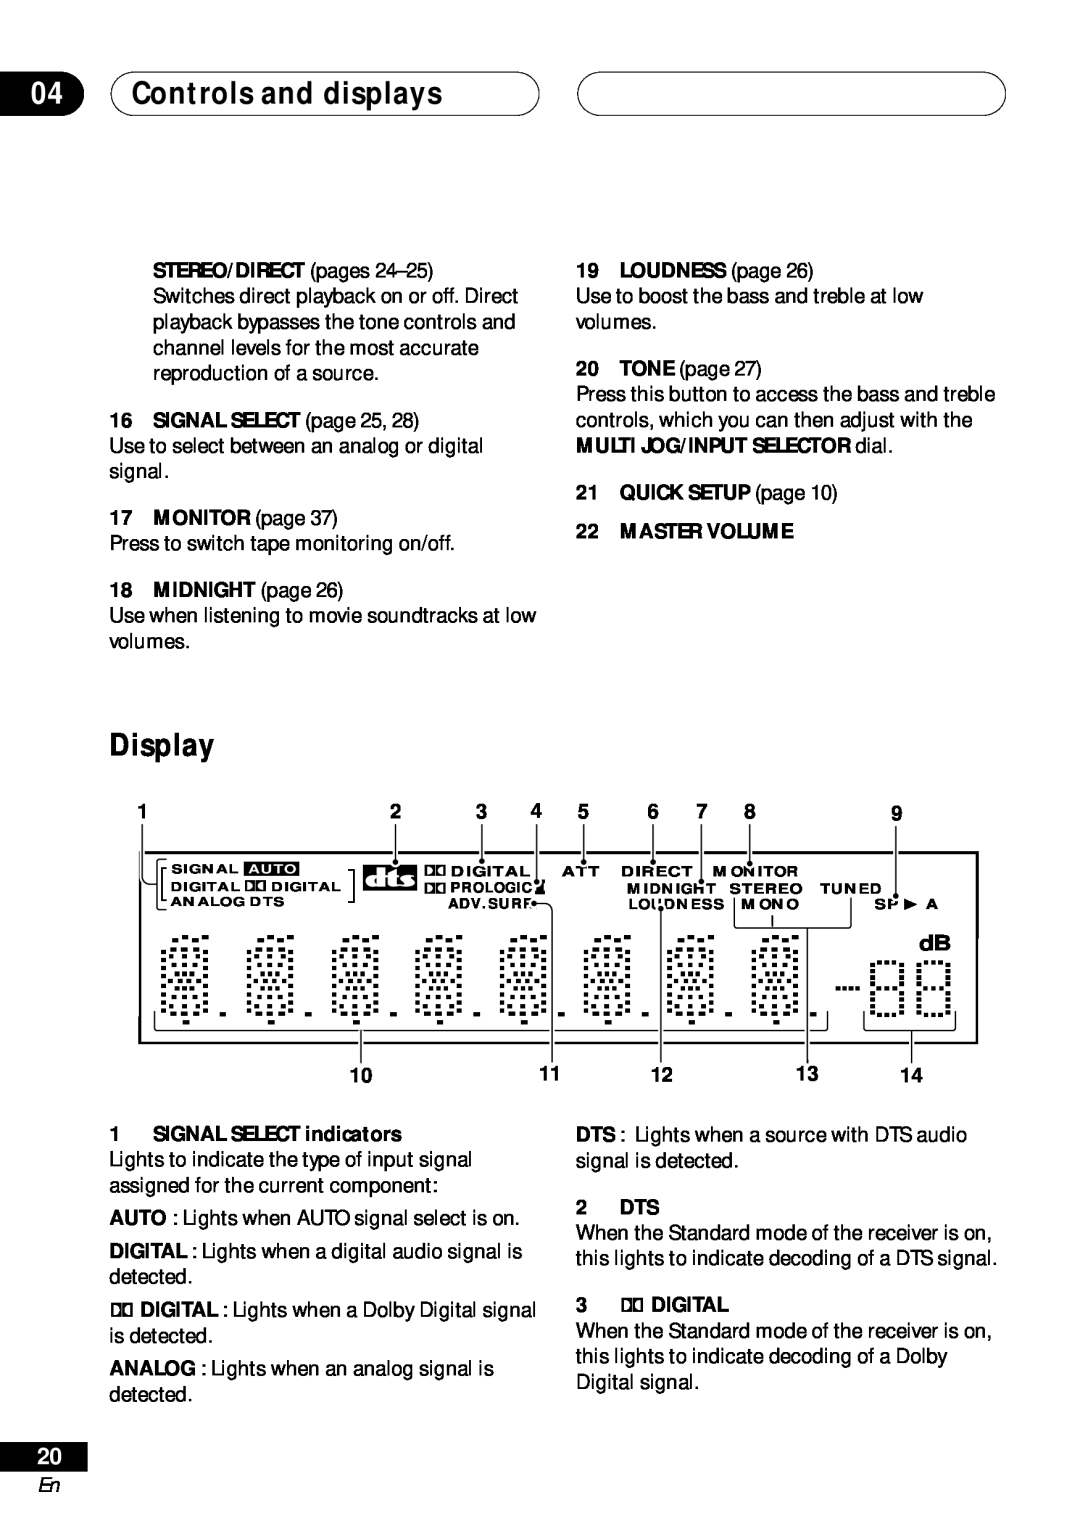 Pioneer VSX-D41, VSX-D511 manual 04Controls and displays, Display 